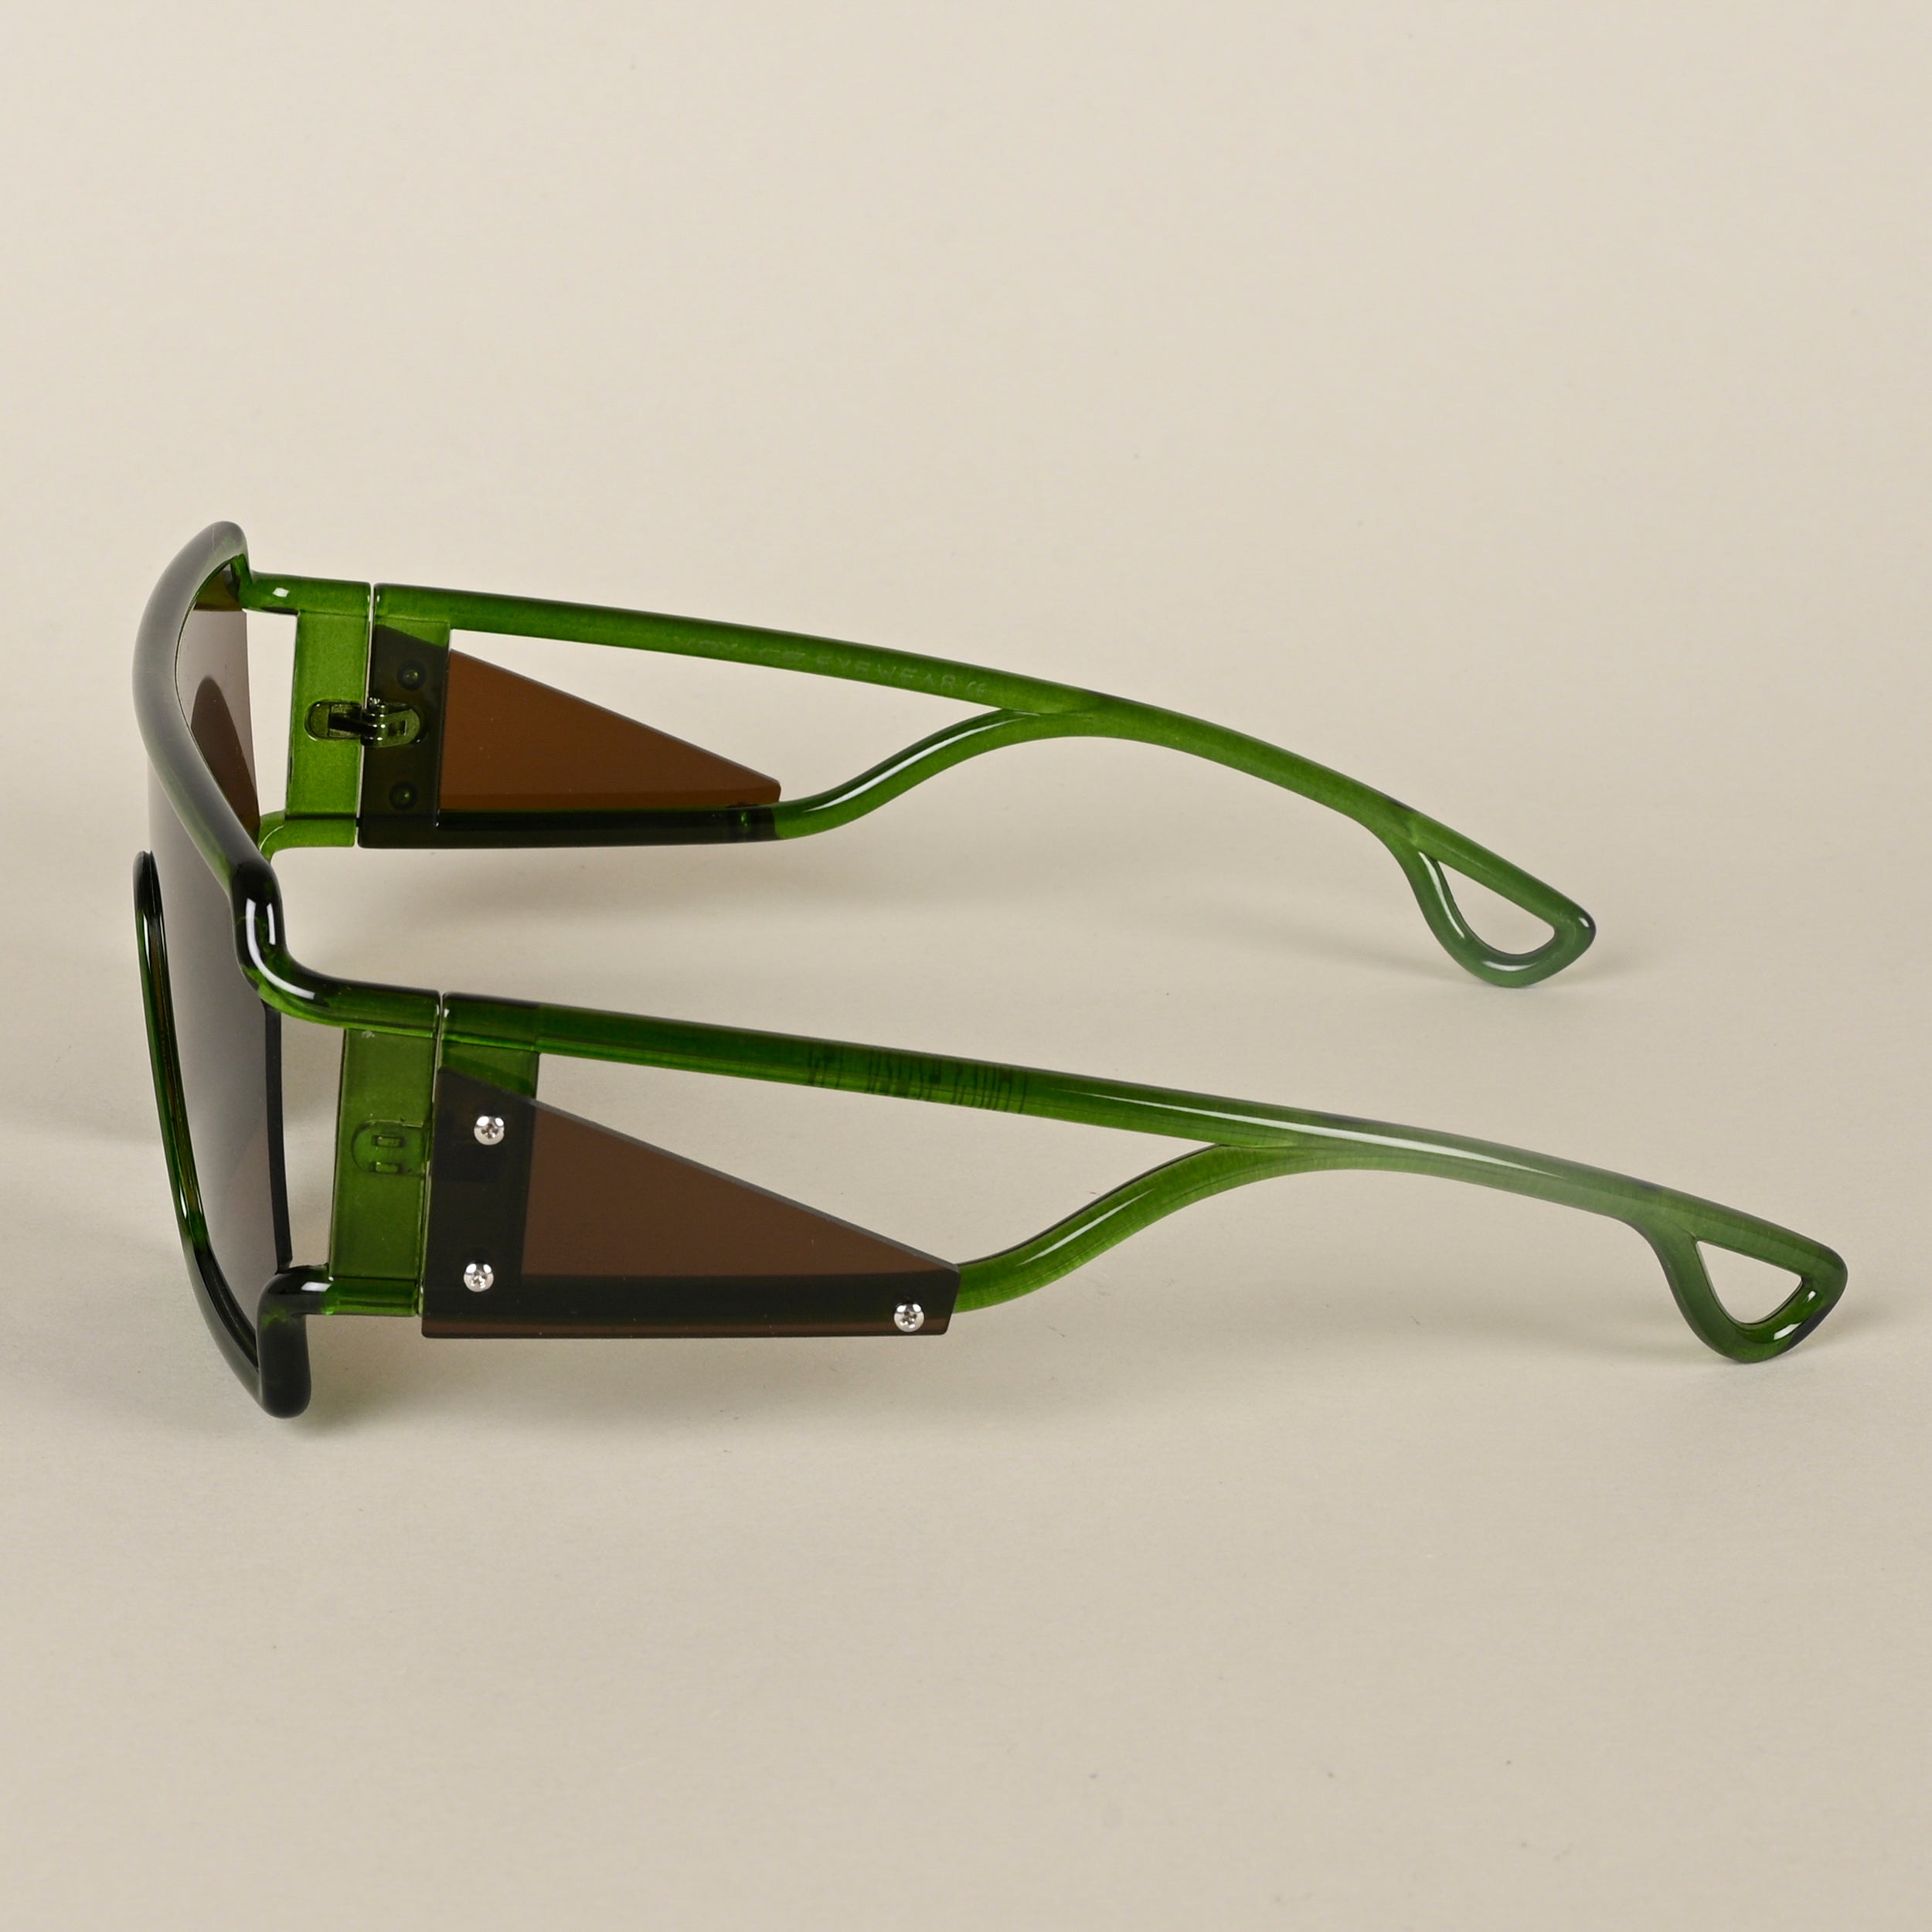 Voyage Mossy Green Wayfarer Sunglasses for Men & Women - MG4561